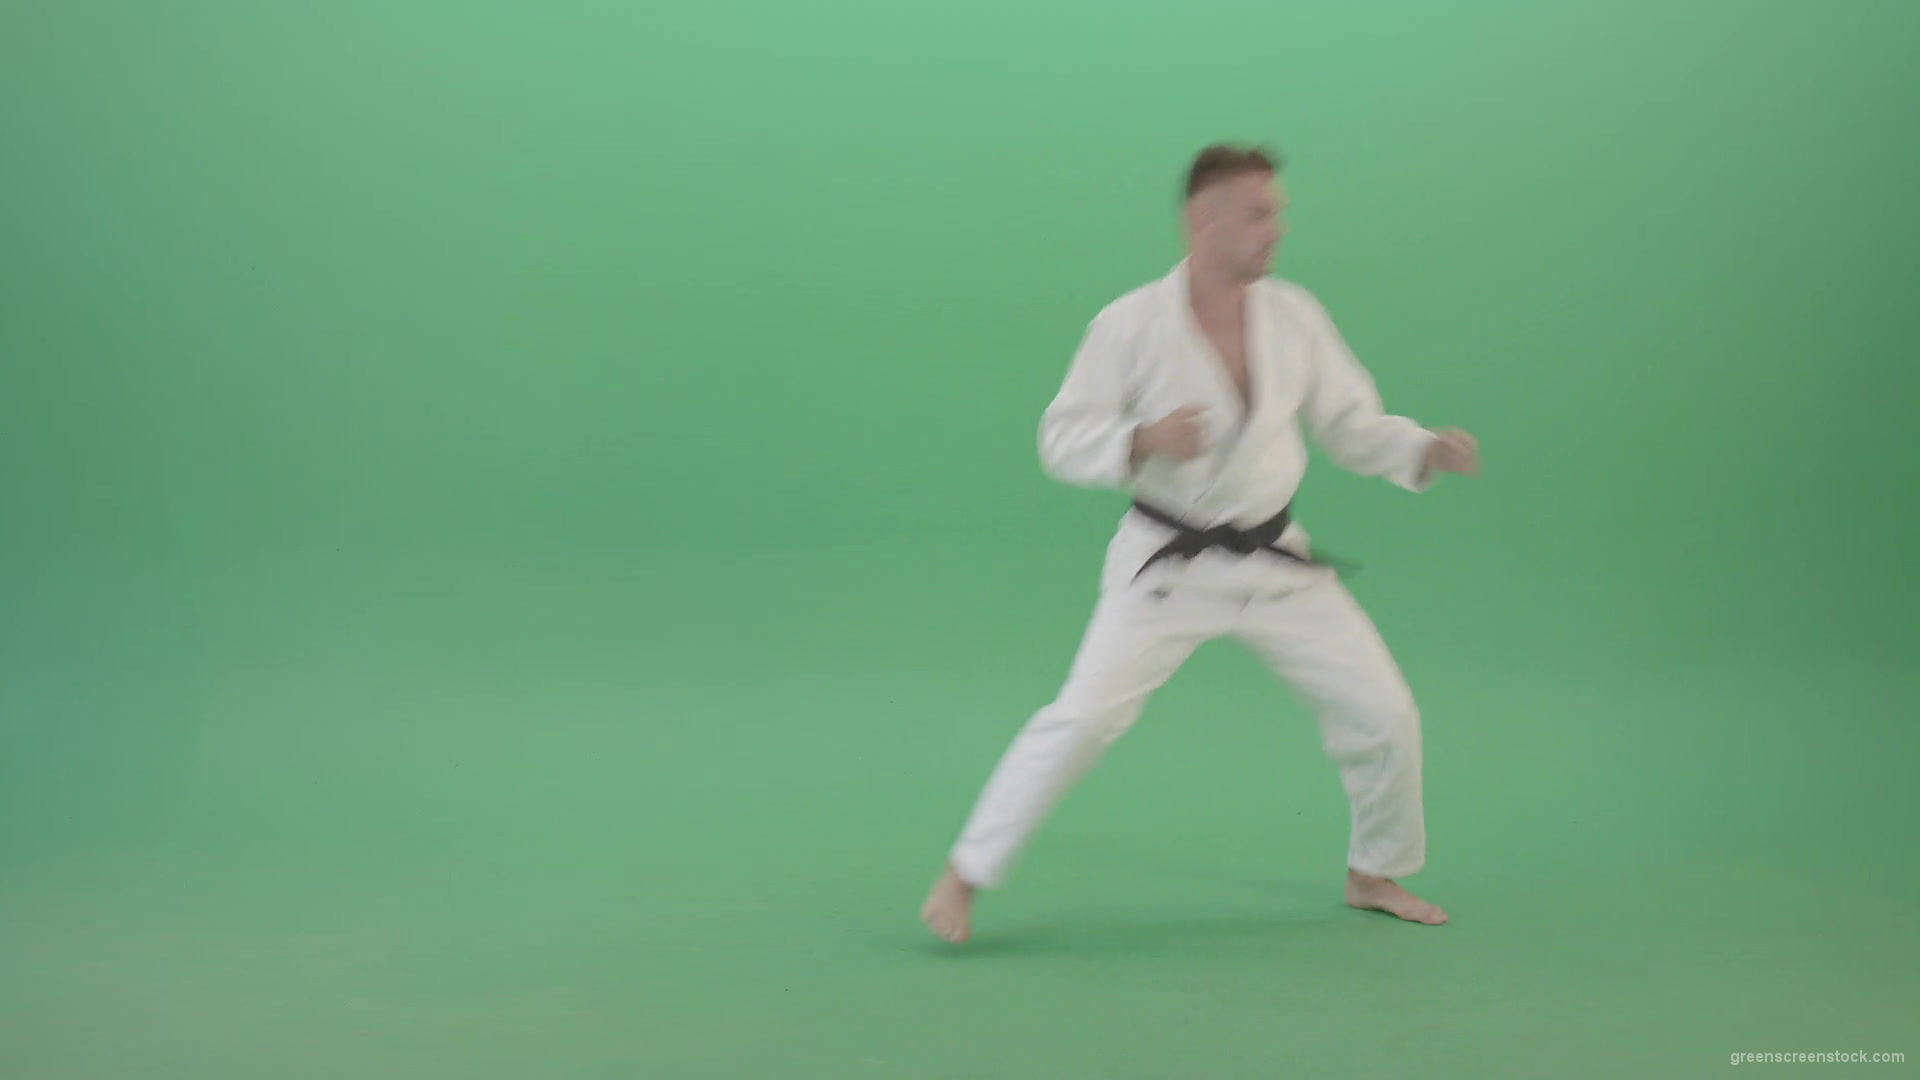 Jujutsu-Sportman-training-isolated-on-green-screen-4K-Video-Footage-1920_009 Green Screen Stock